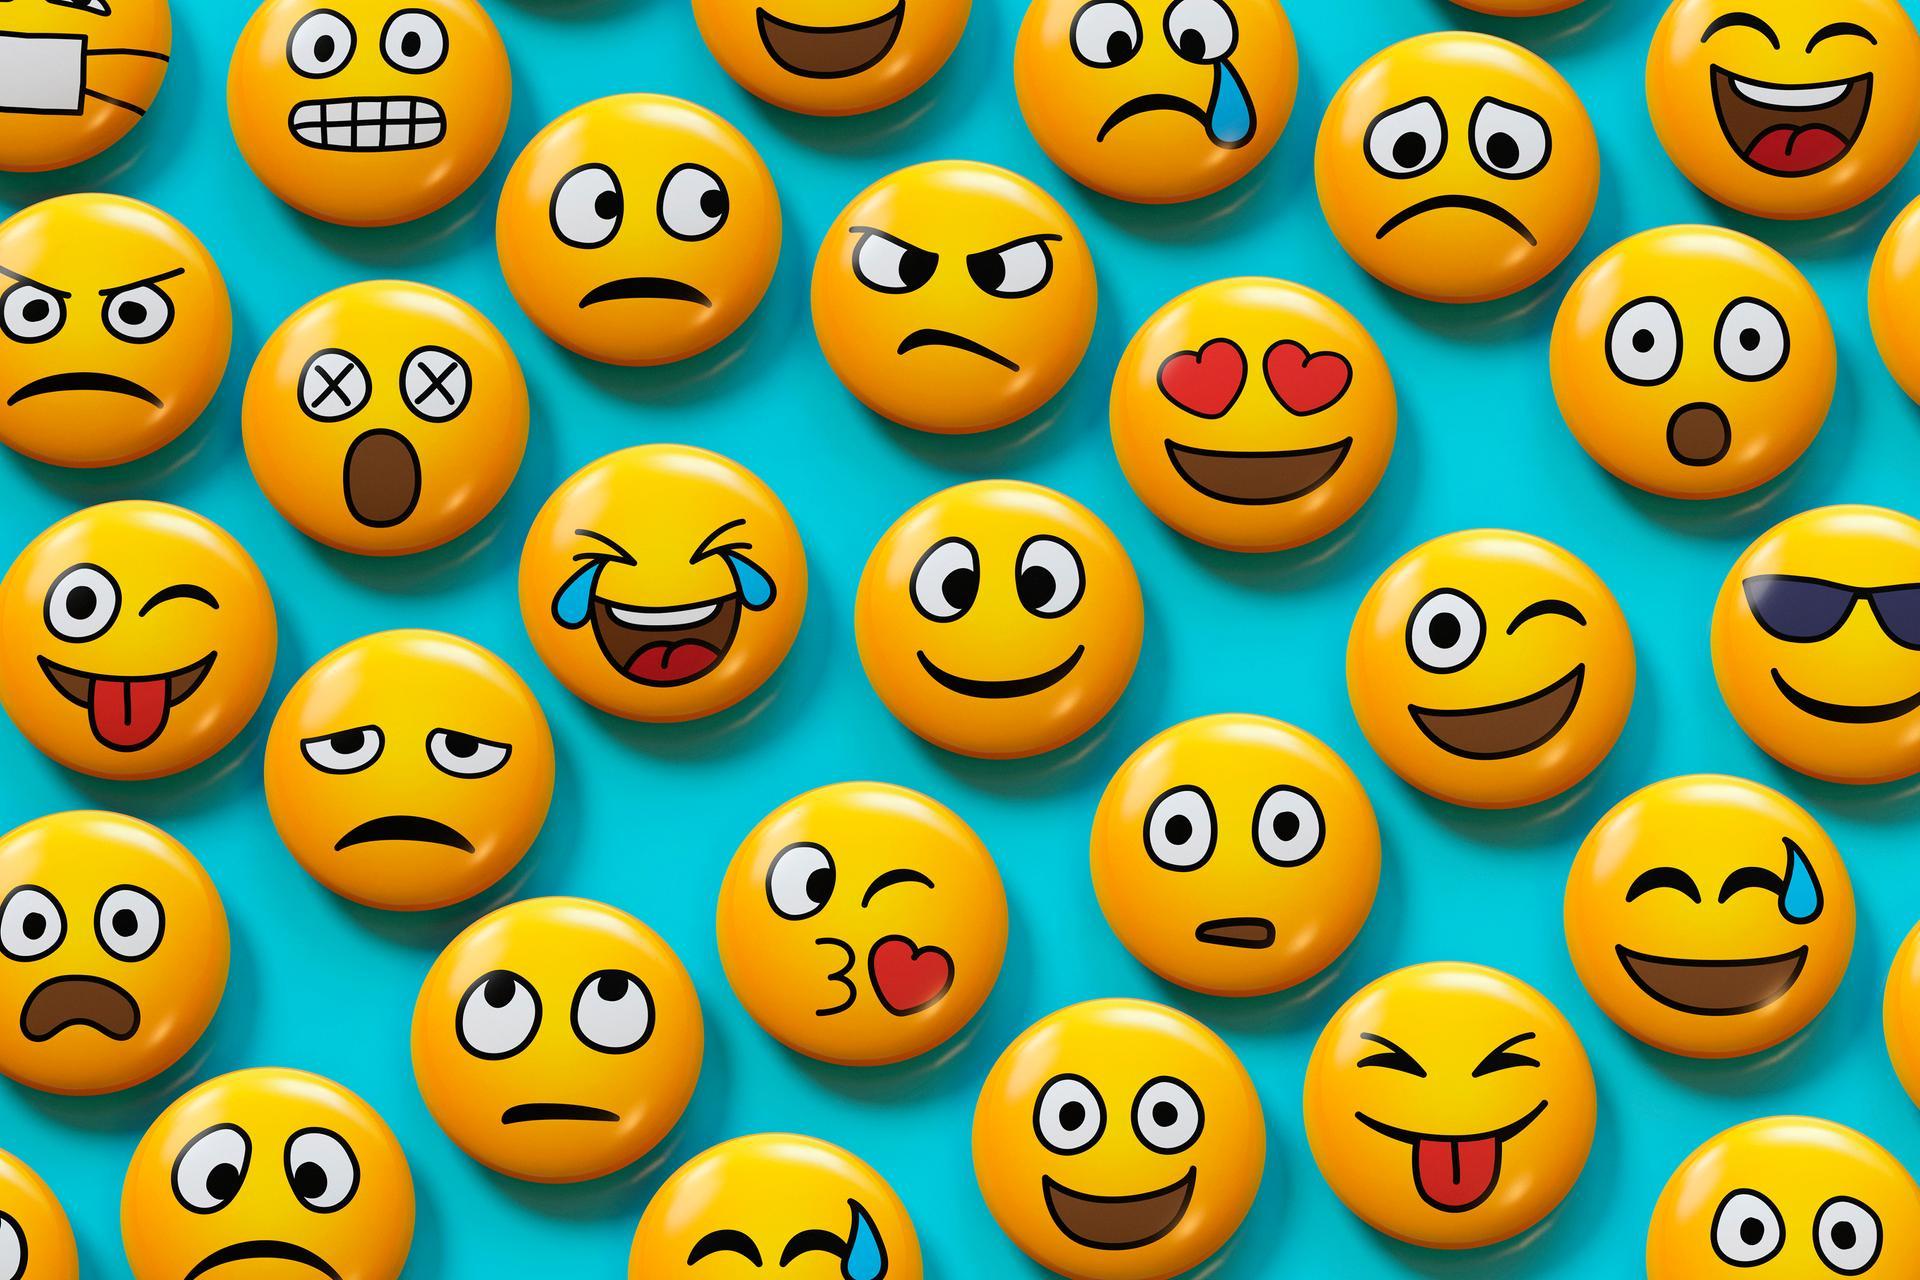 Using Facebook Emojis And Smileys